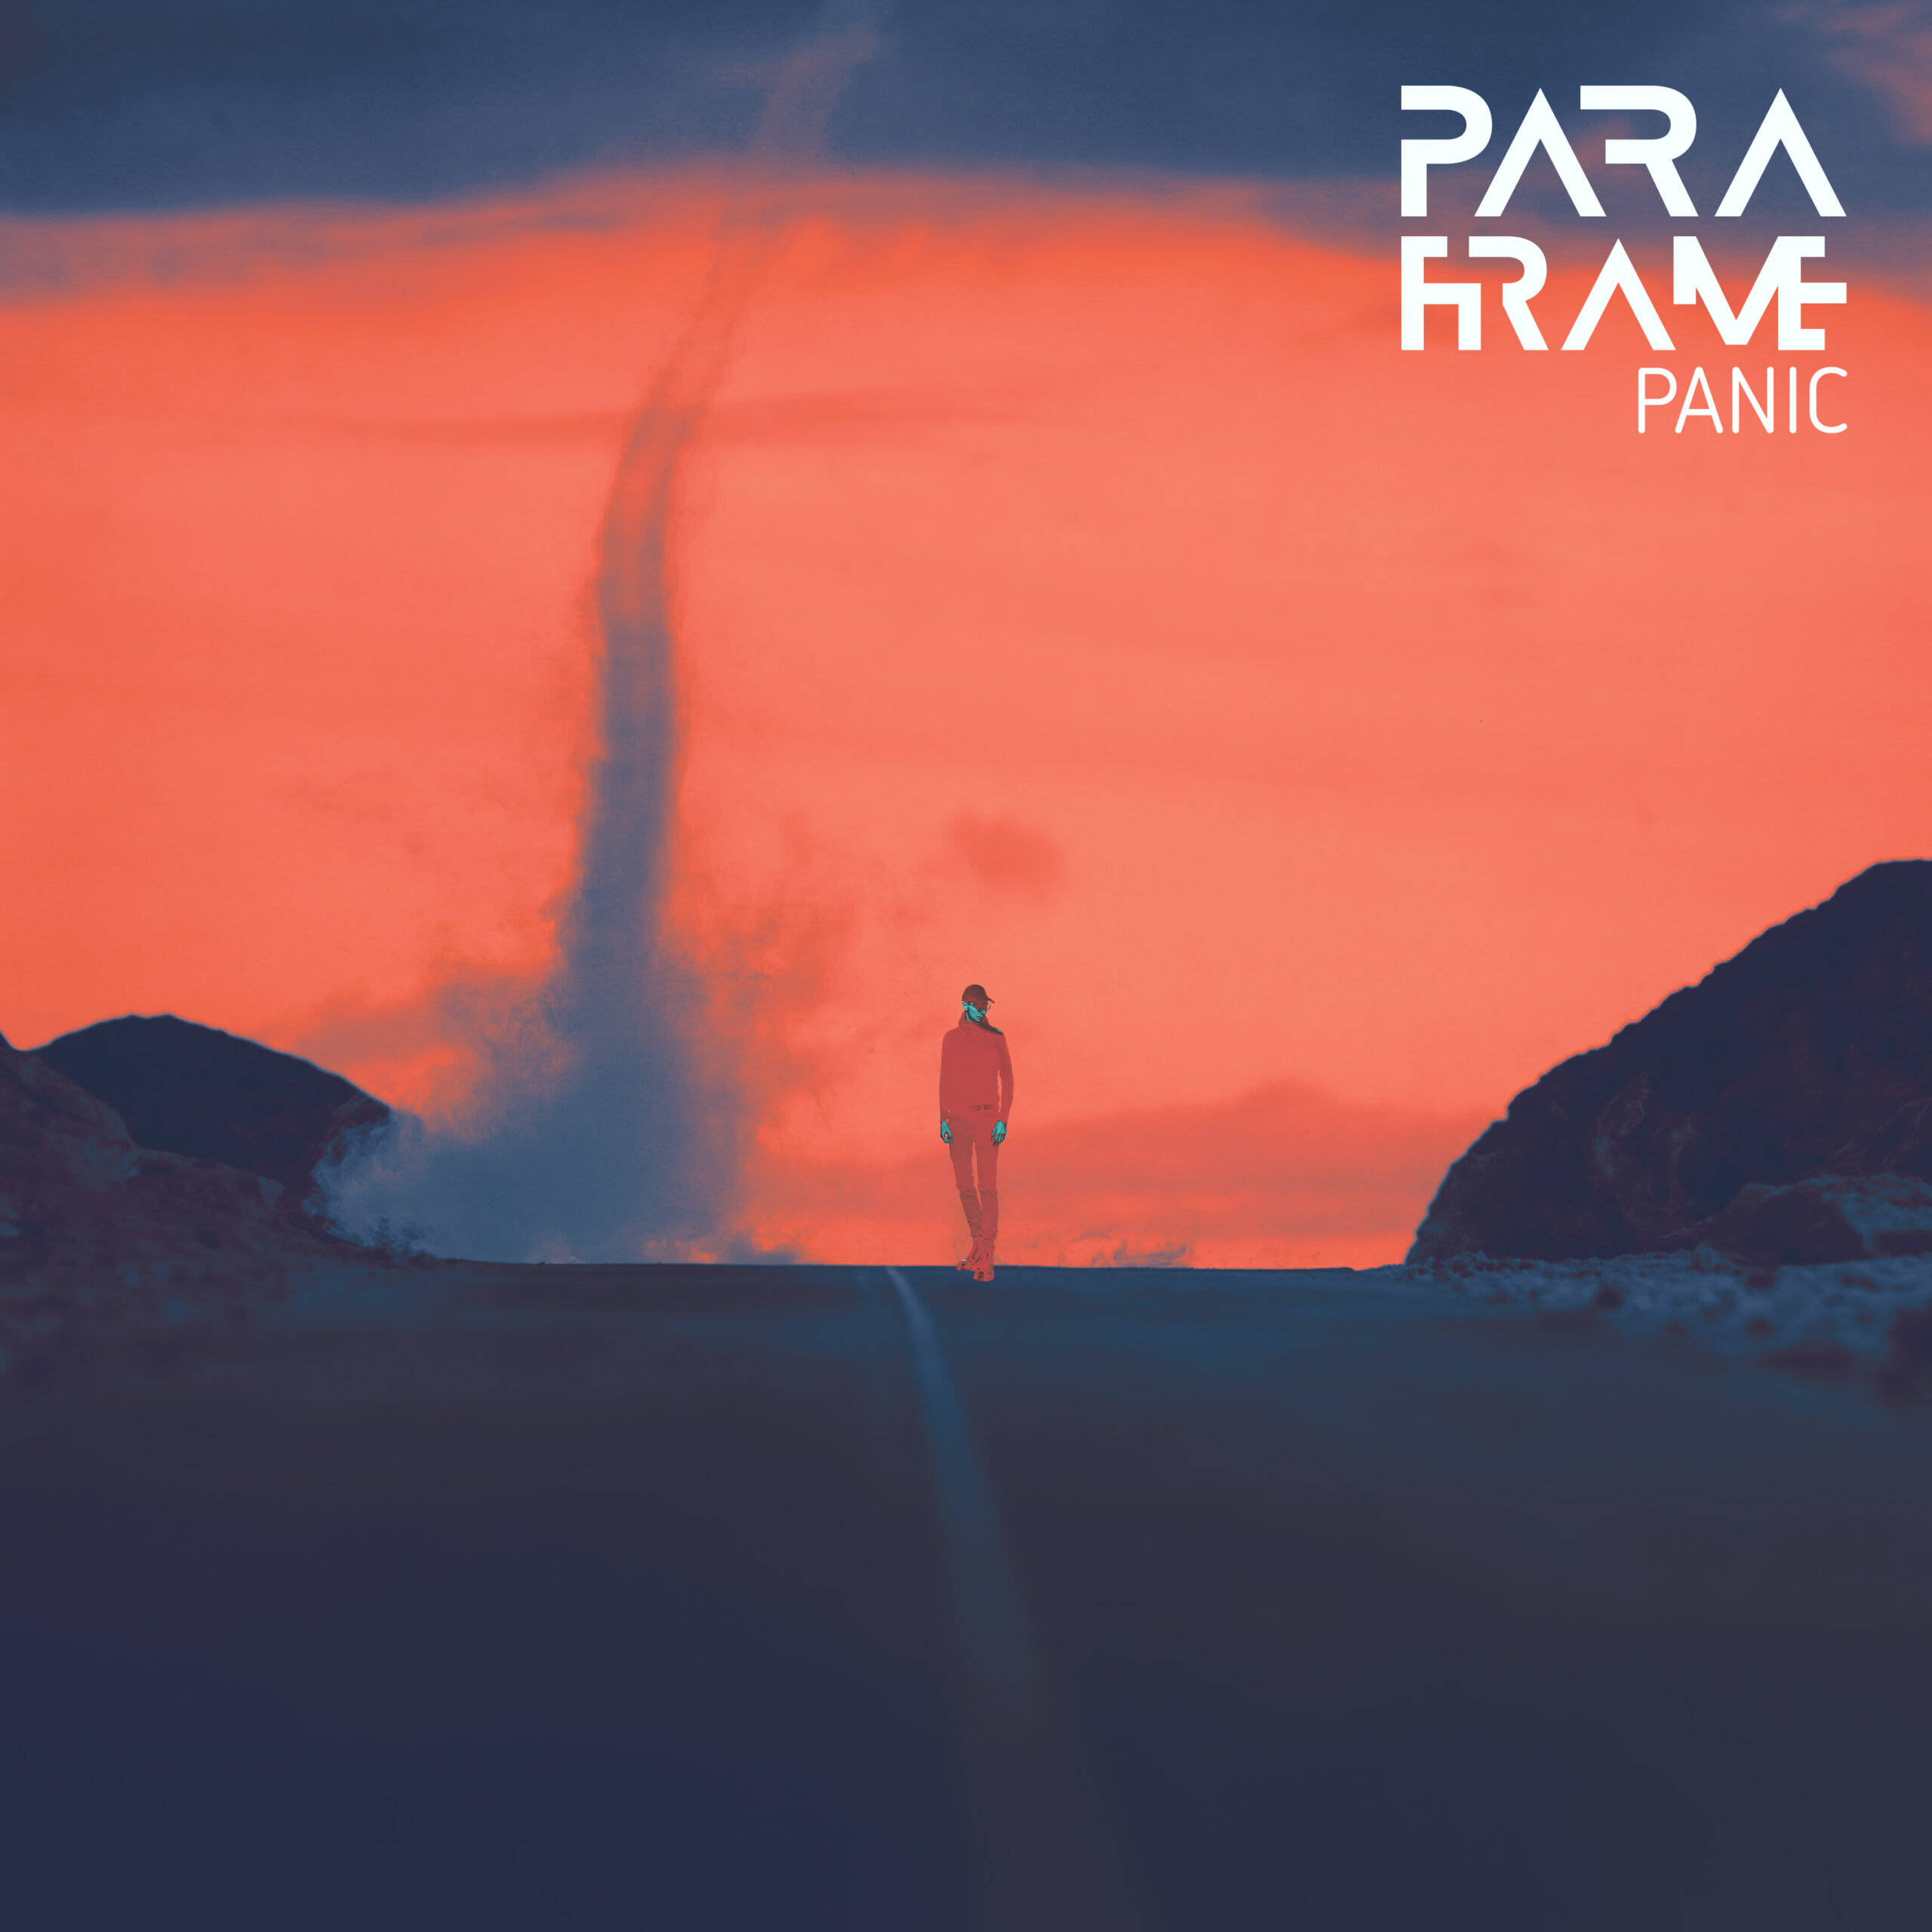 PARAFRAME presents Panic on Black Hole Recordings